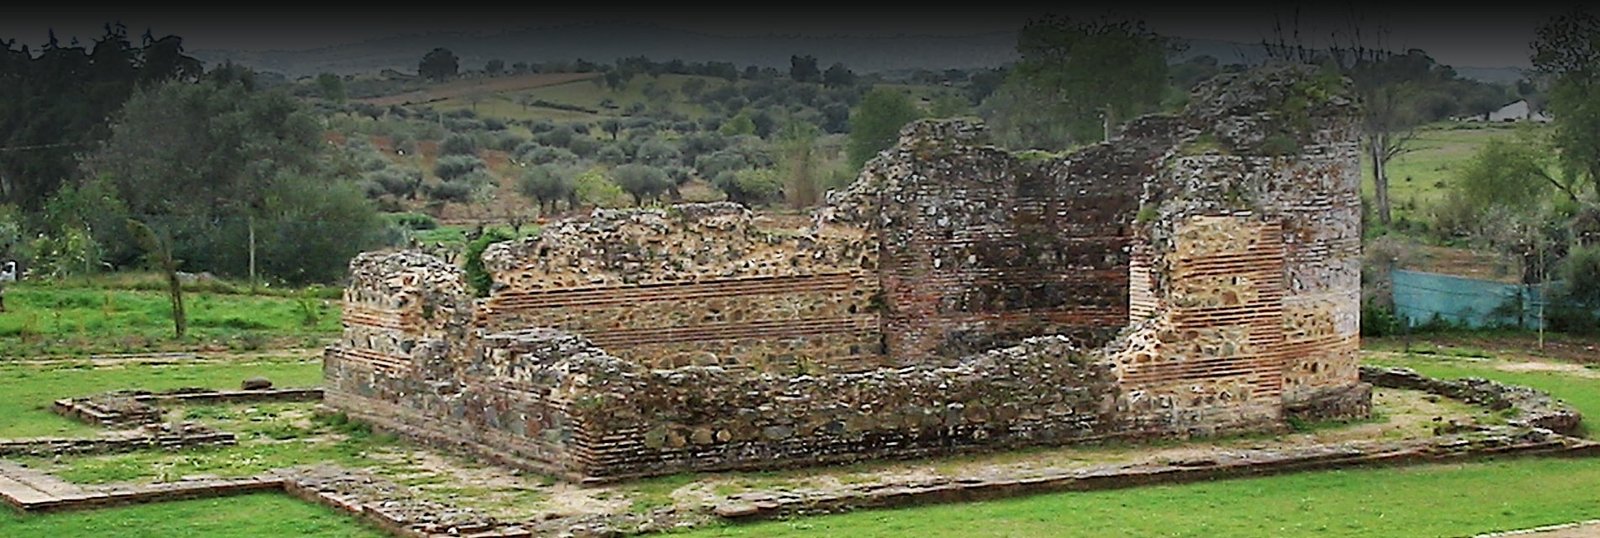 Villa Romana de Sao Cucufate header - Origenes de Europa